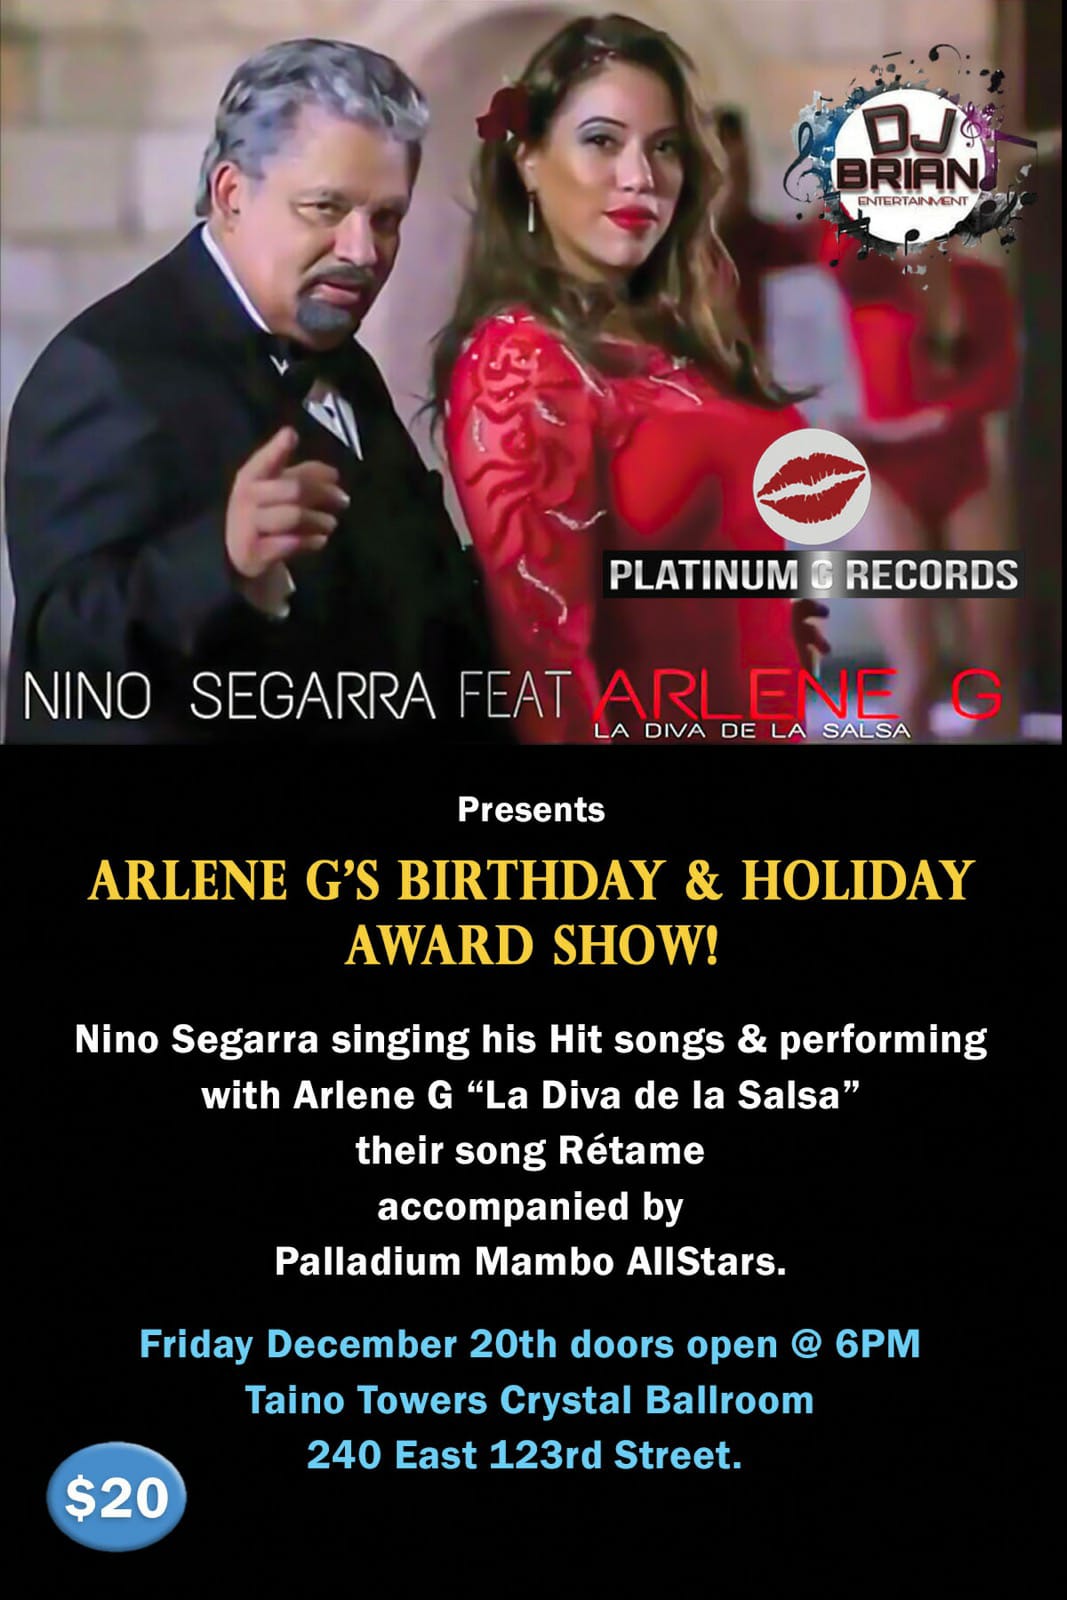 Nino Segarra & Arlene G Performing live!
Birthday Bash & Platinum G Records Award Show 
